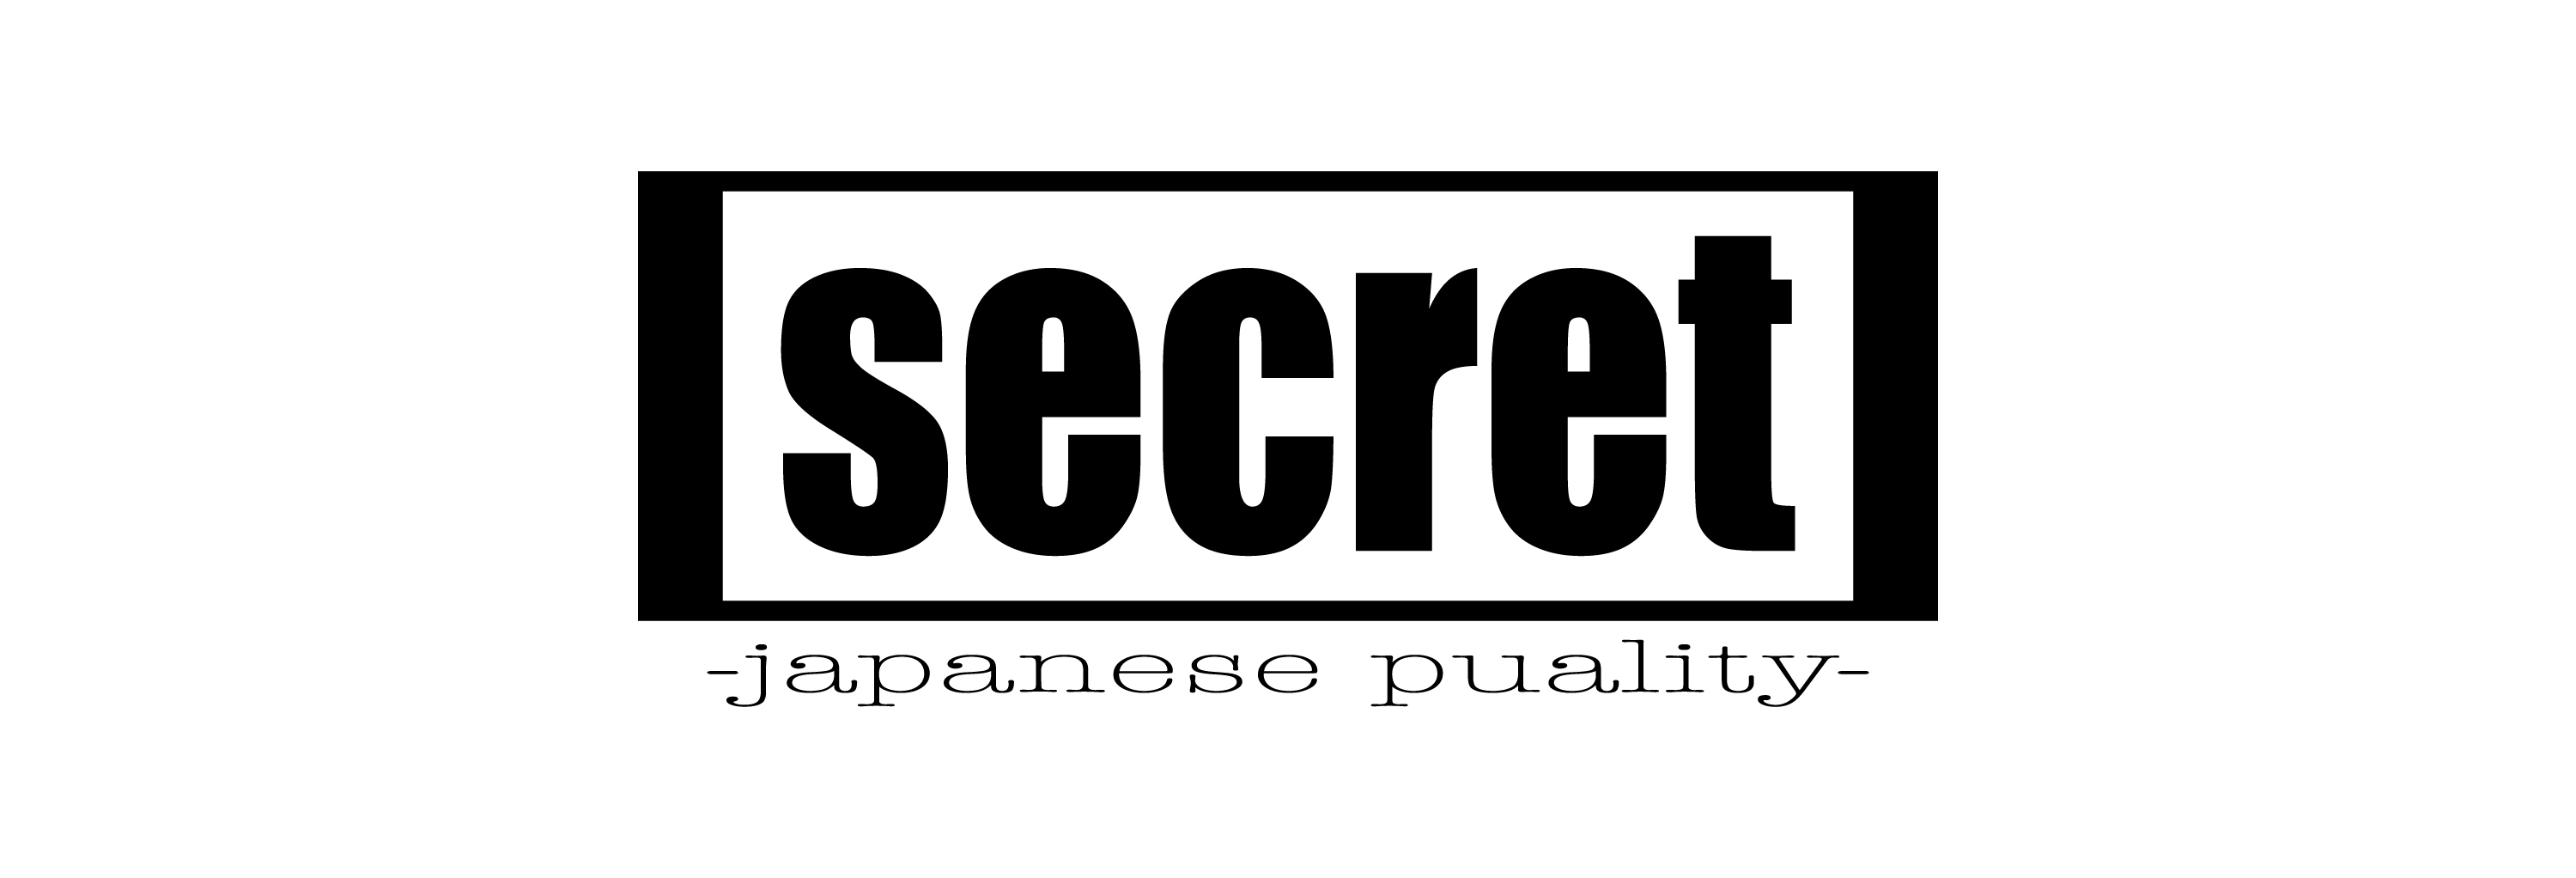 secret code